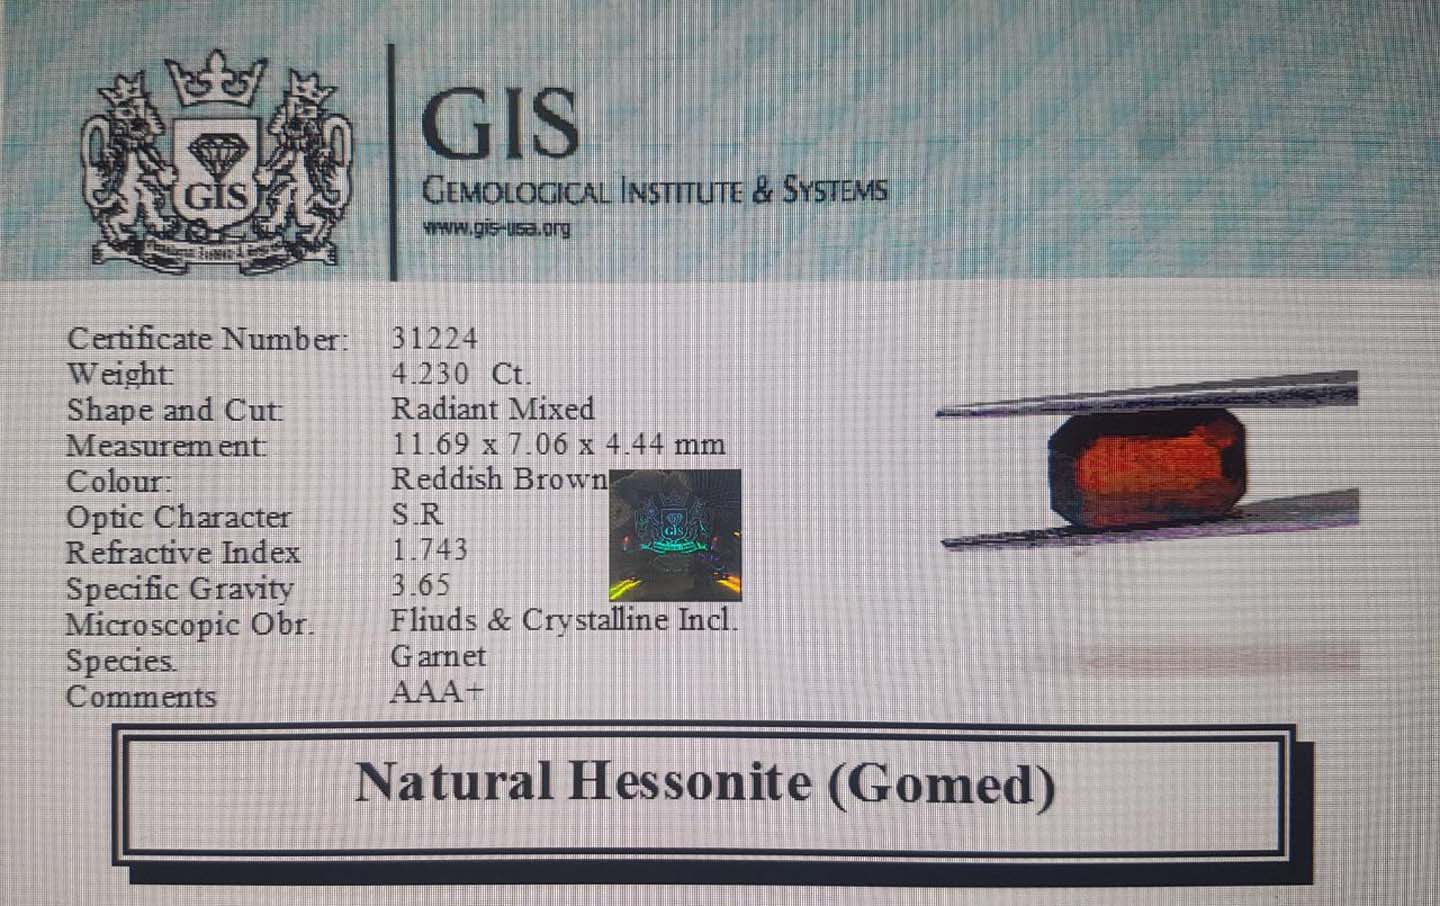 Hessonite (Gomed) 4.23 Ct.